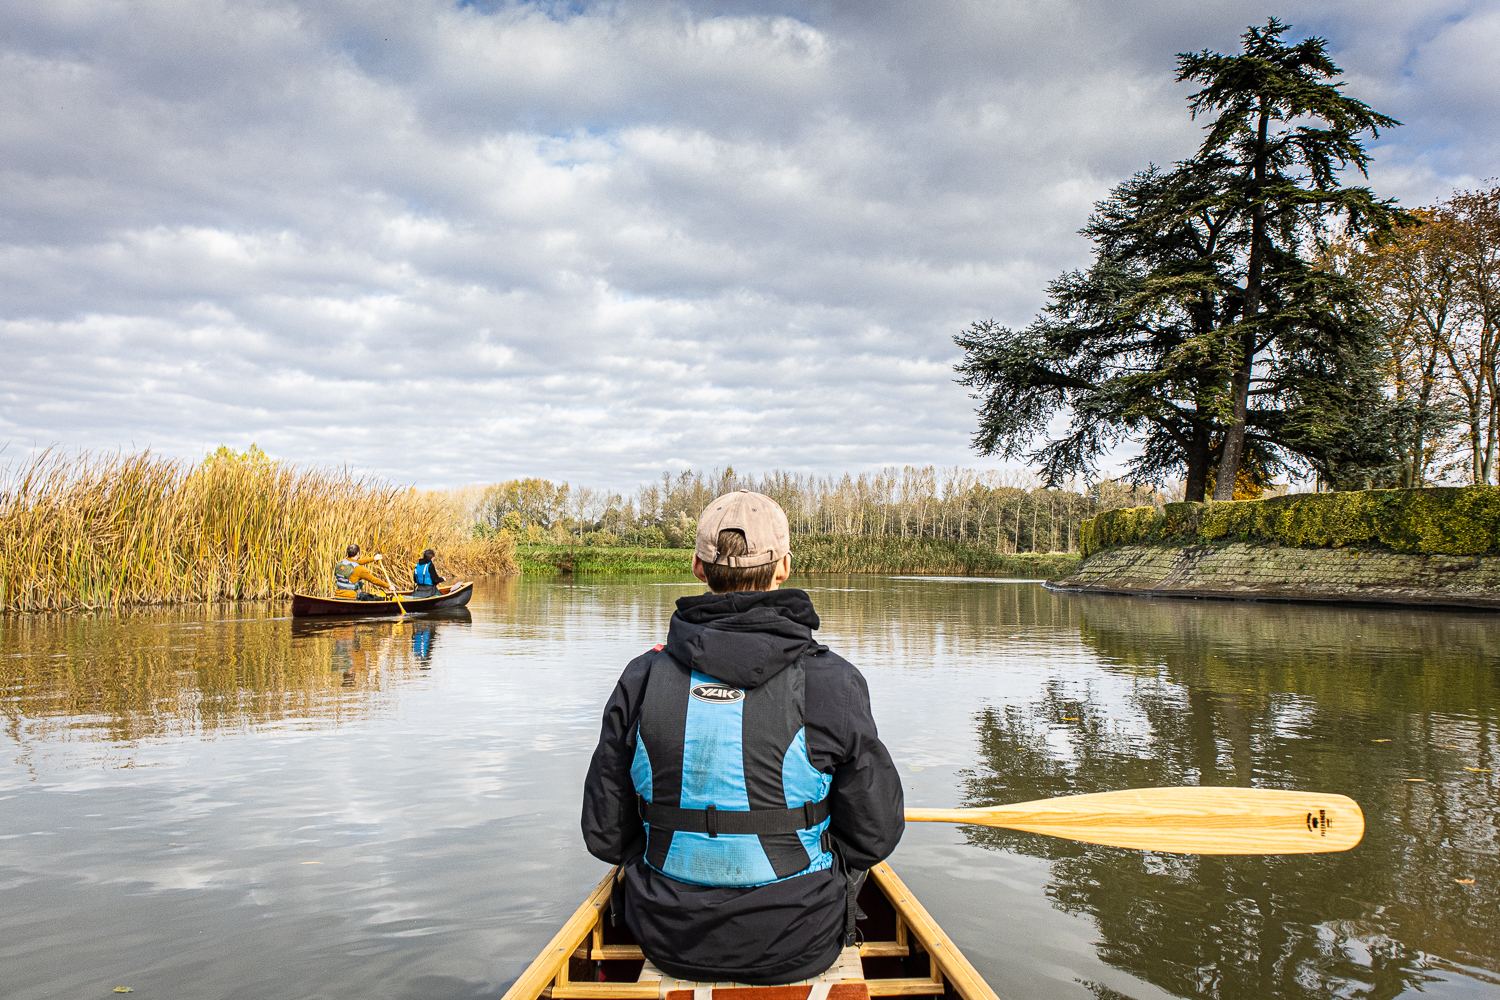 Choosing a canoe paddle